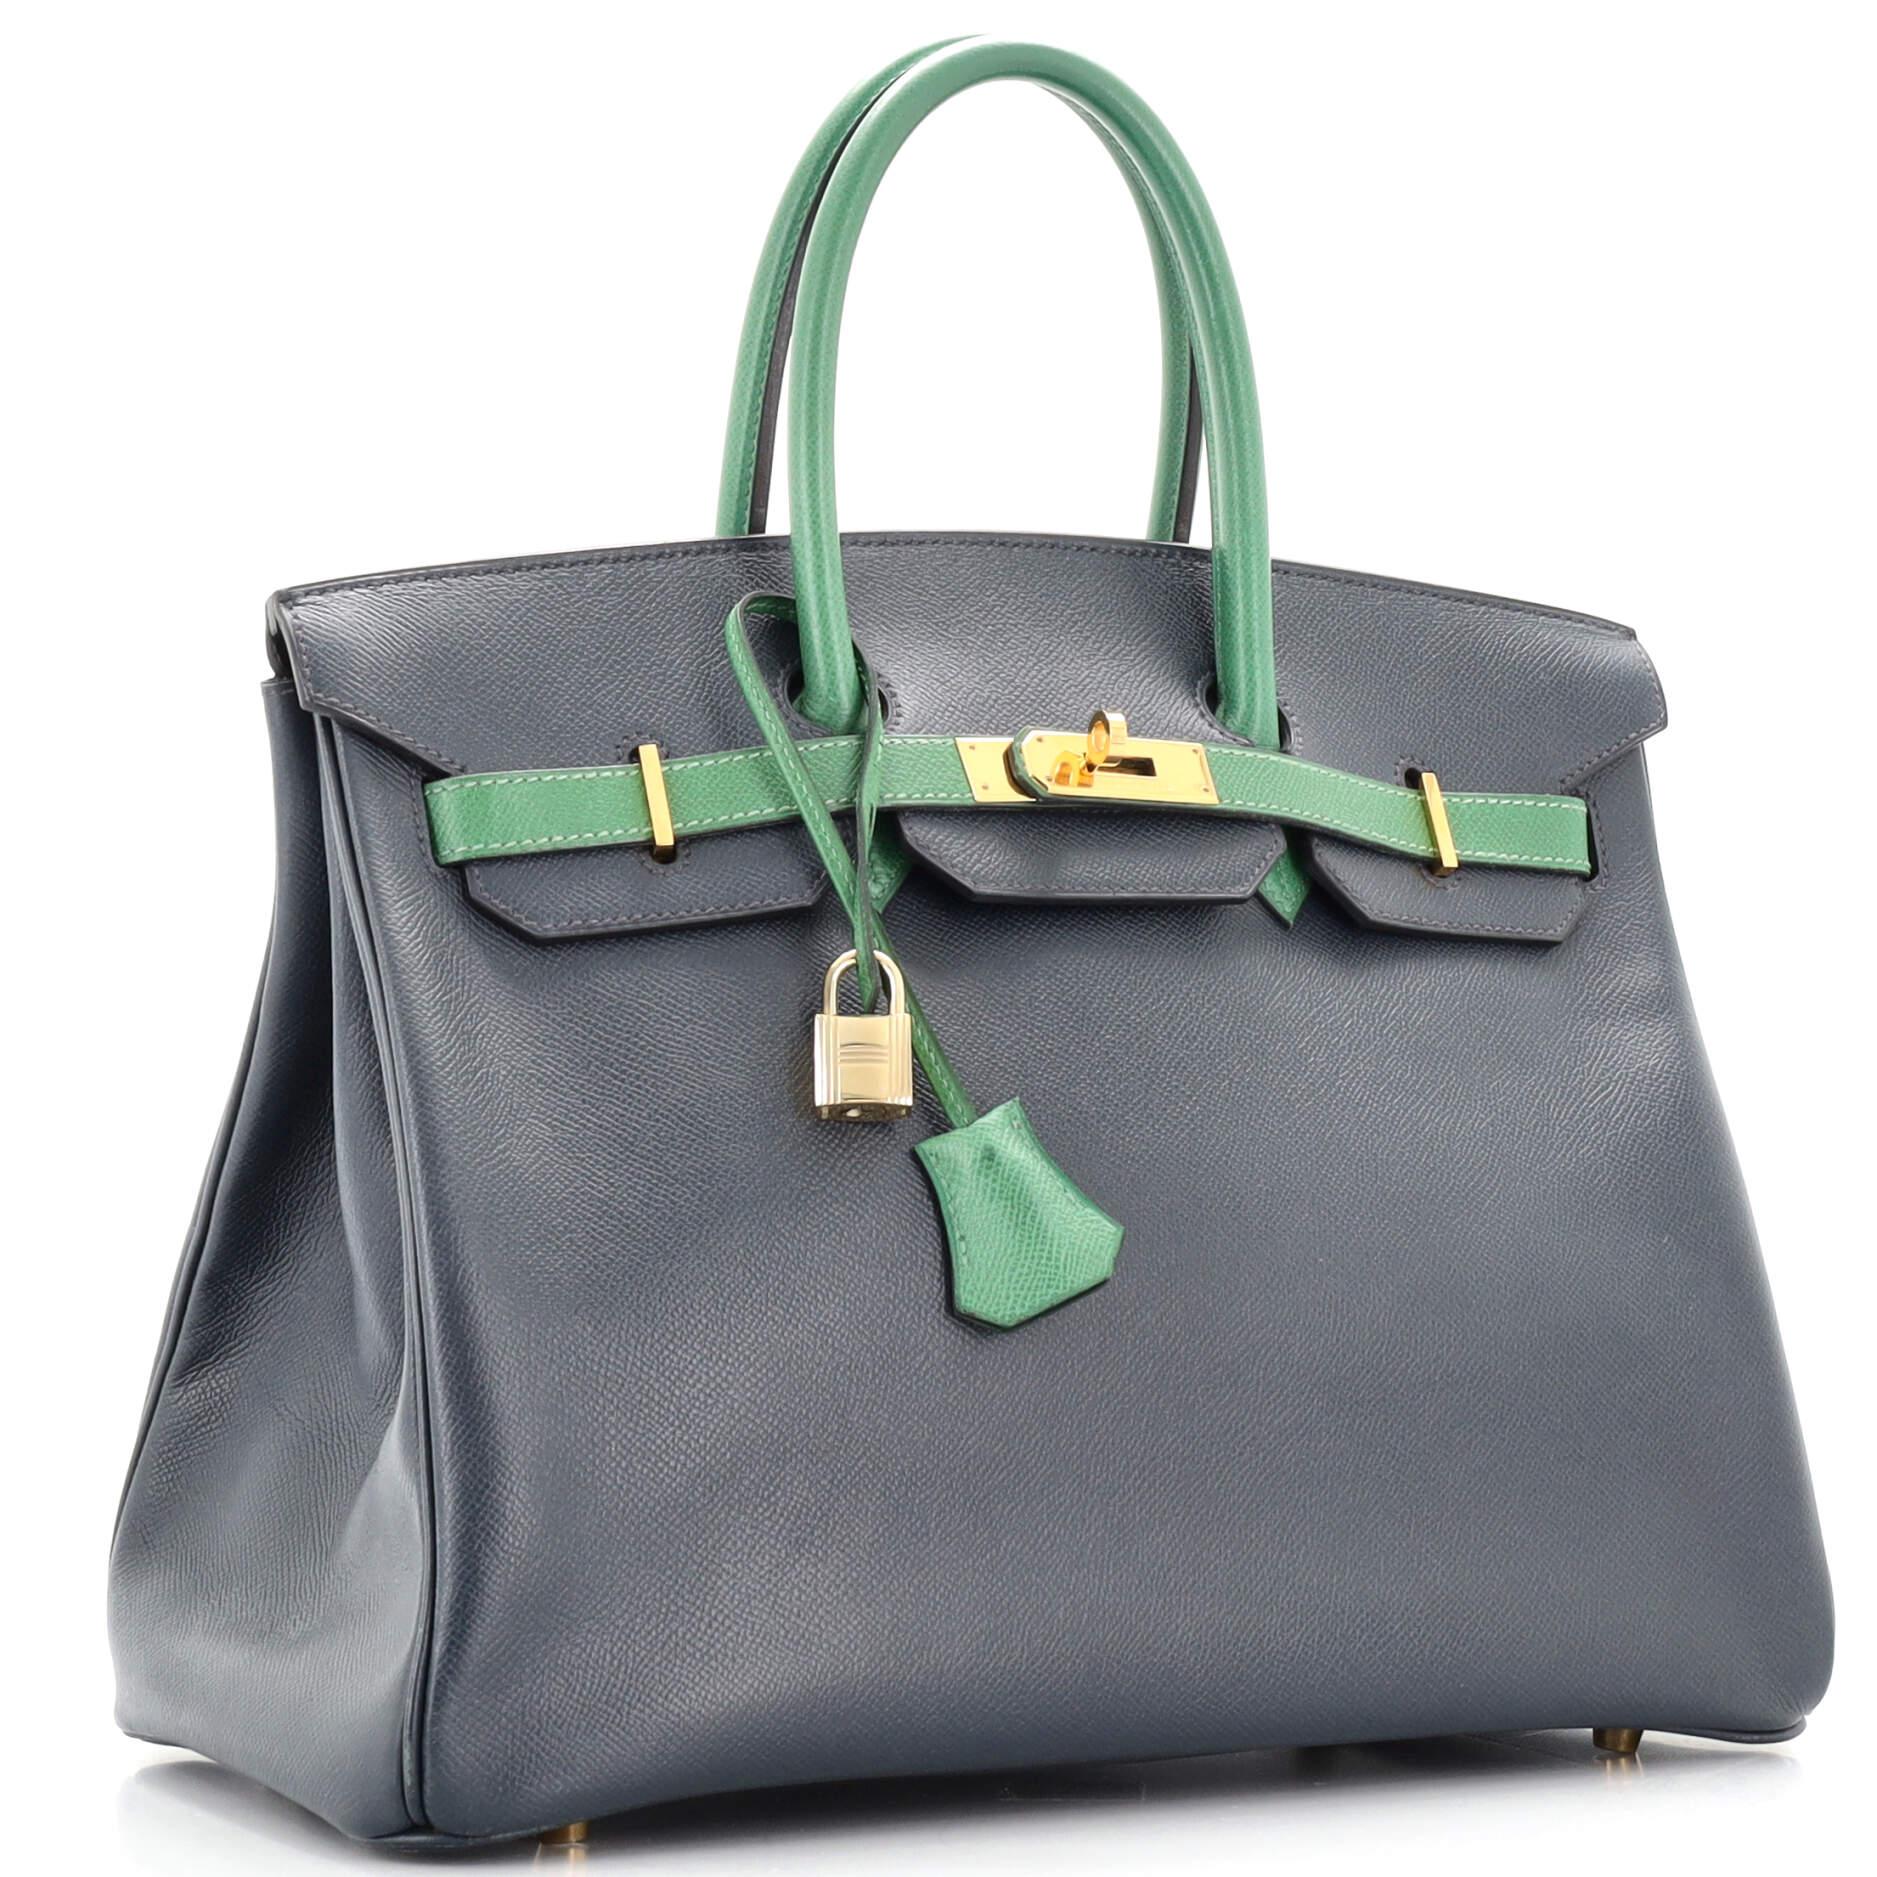 Gray Hermes Birkin Handbag Bicolor Courchevel with Gold Hardware 35